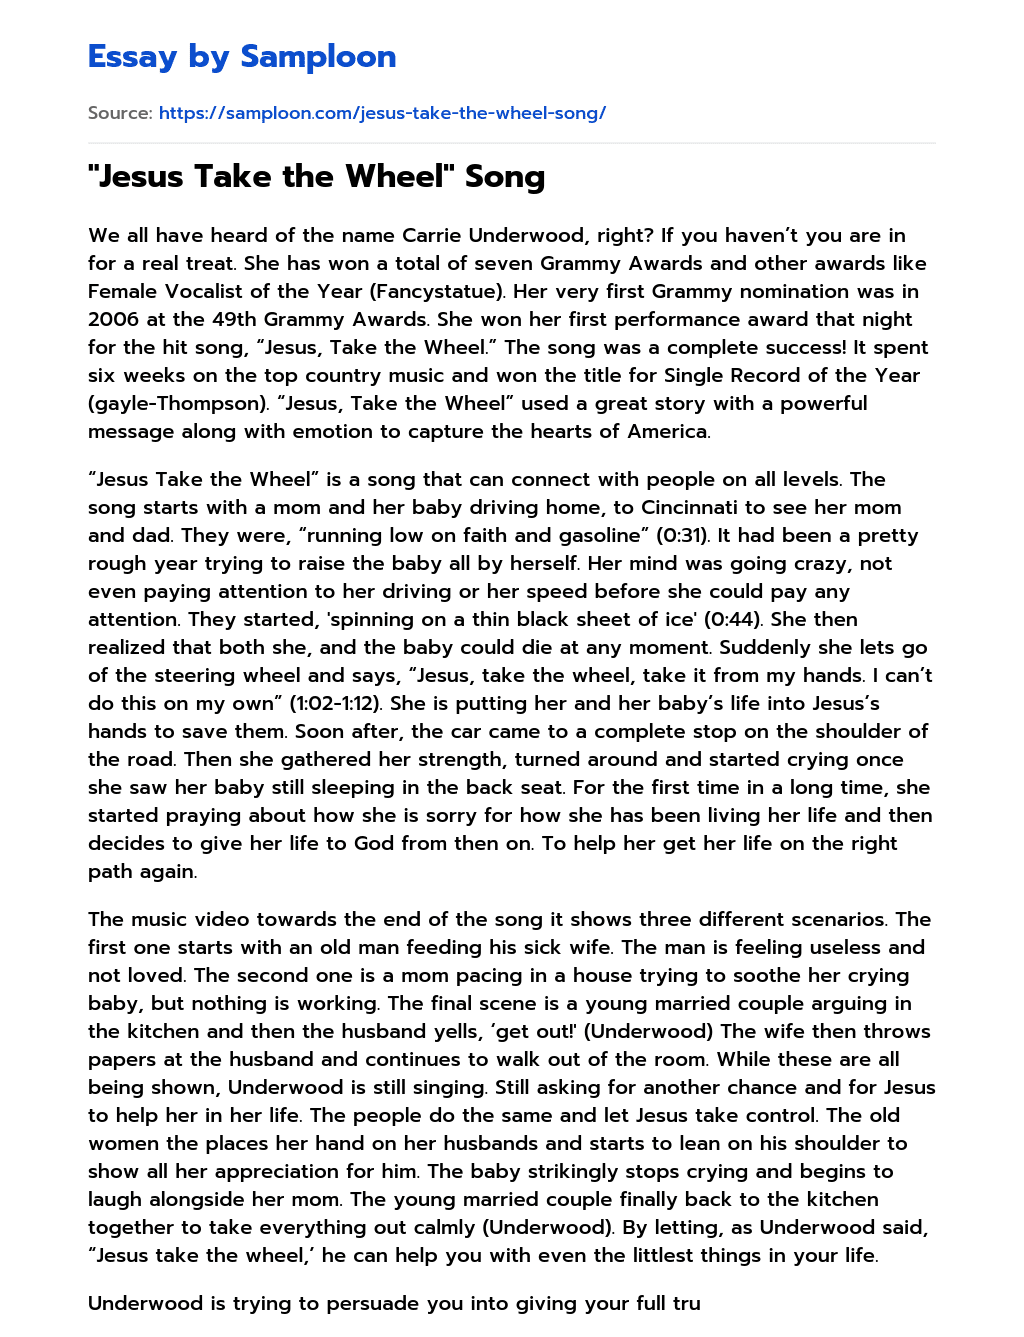 “Jesus Take the Wheel” Song essay